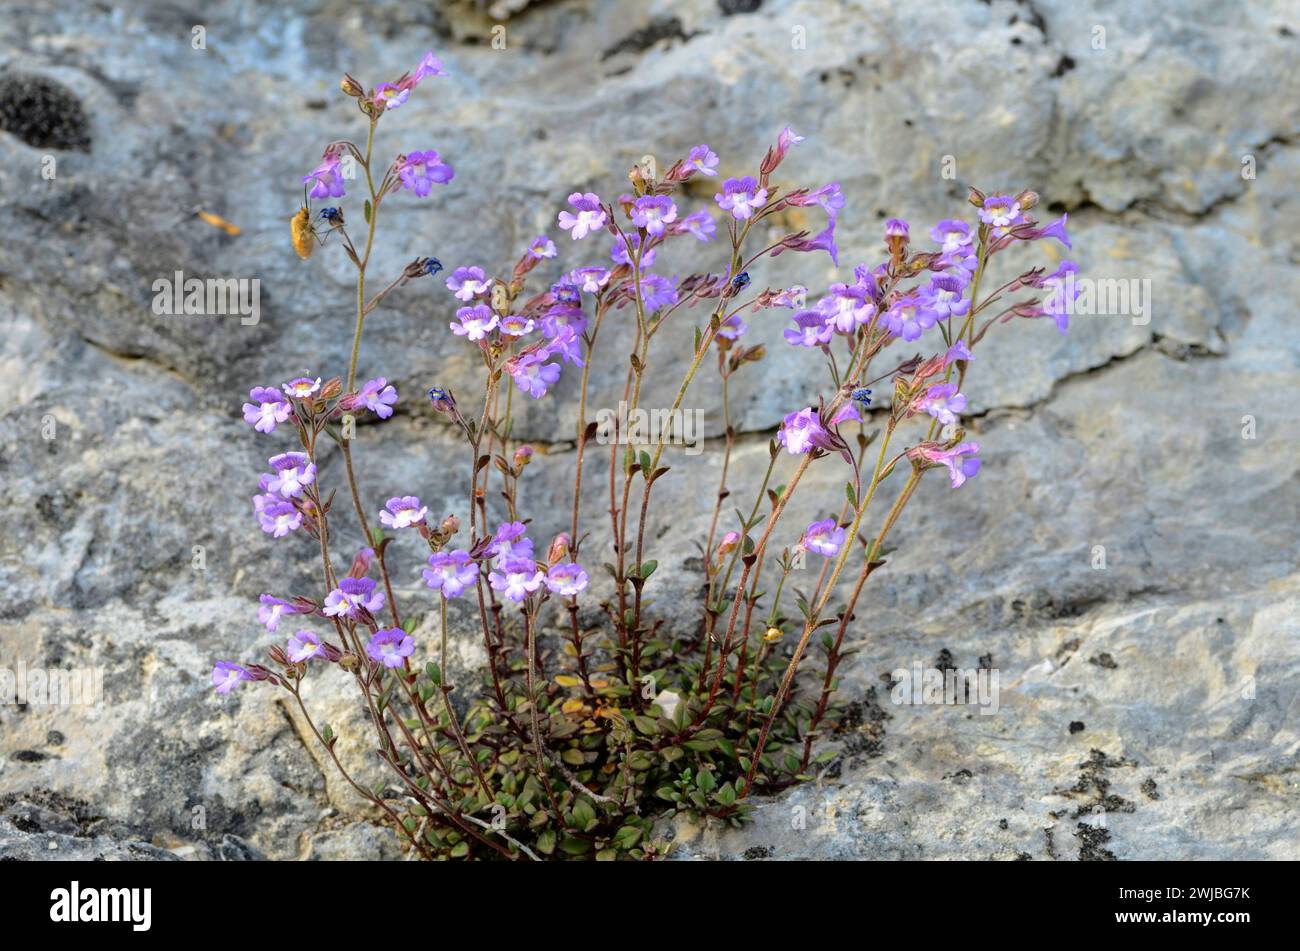 Chaenorhinum origanifolium is a rock plant native to the Iberian Peninsula and the Balearic Islands. Stock Photo